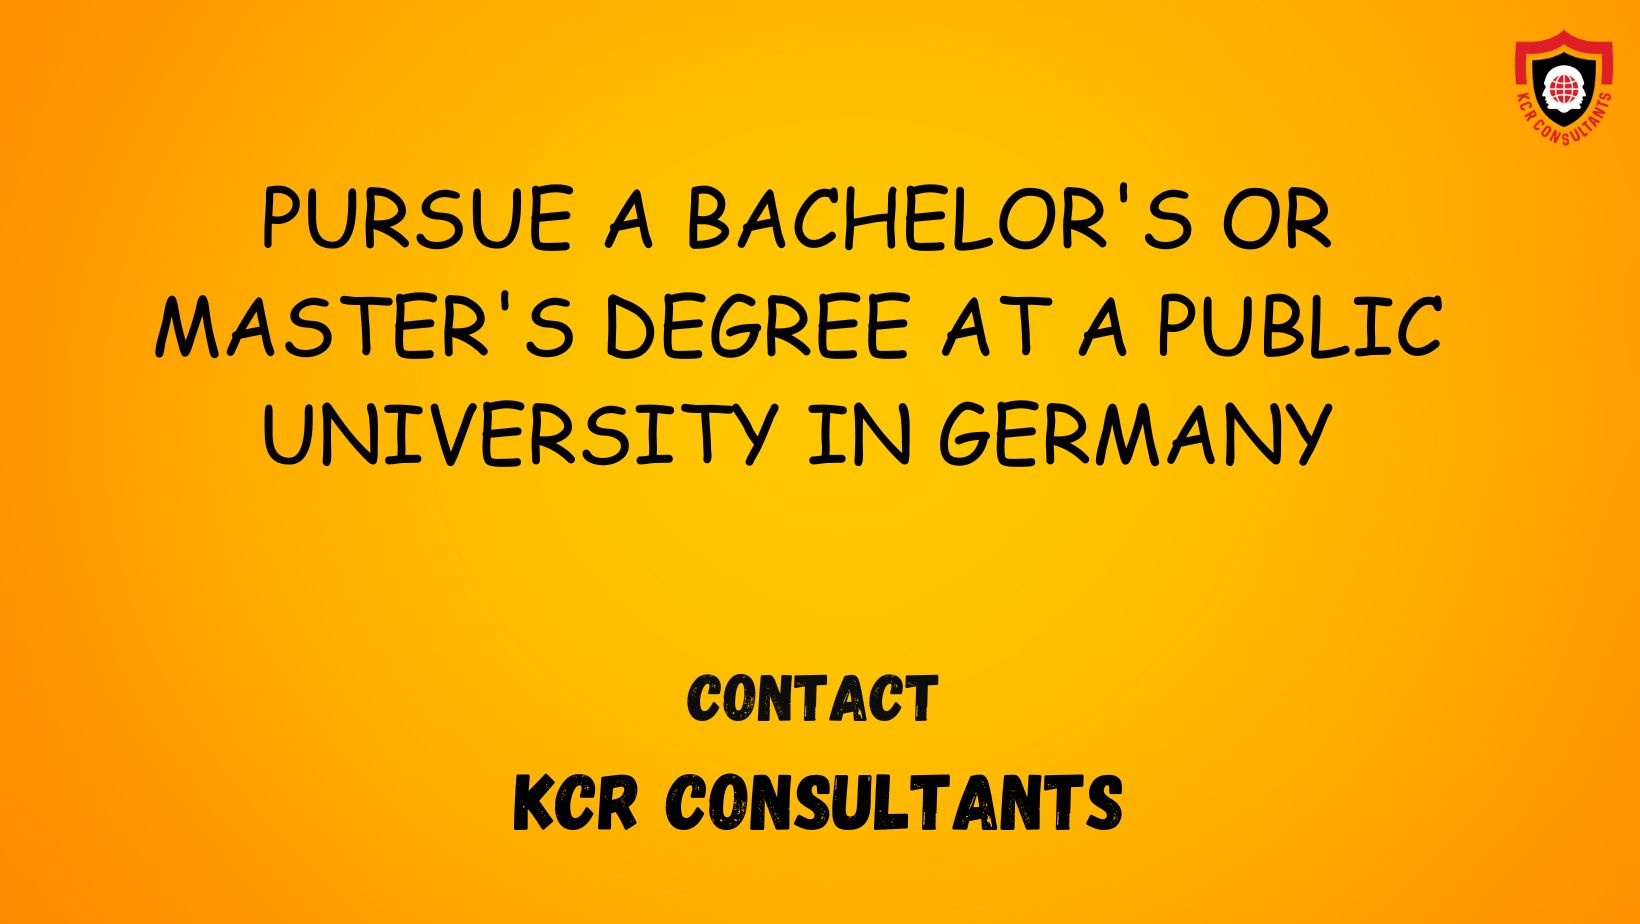 Leuphana University - Contact us - KCR CONSULTANTS